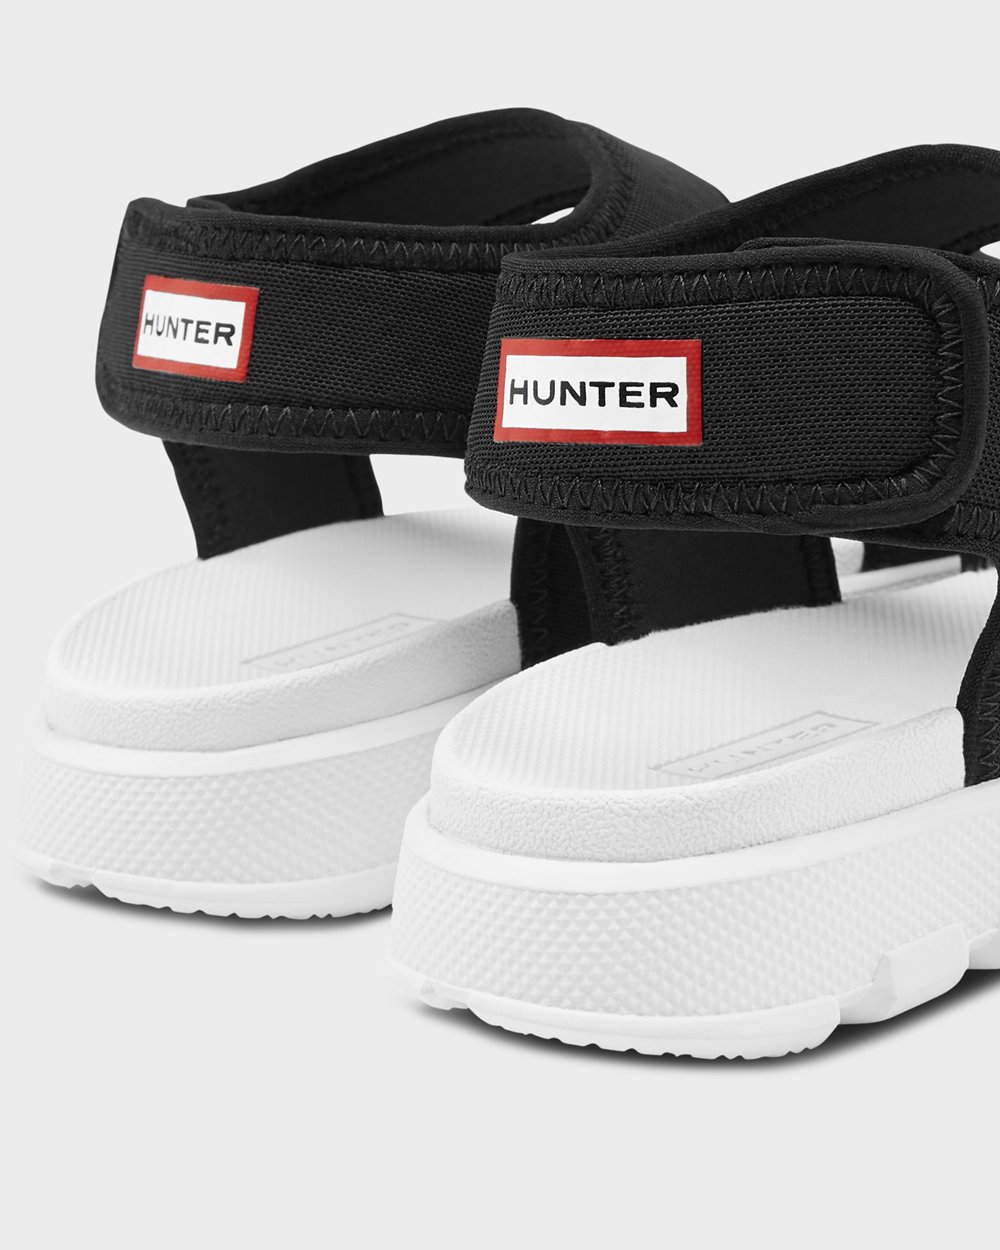 Womens Sandals - Hunter Original Outdoor Walking (51GDKLNQB) - Black